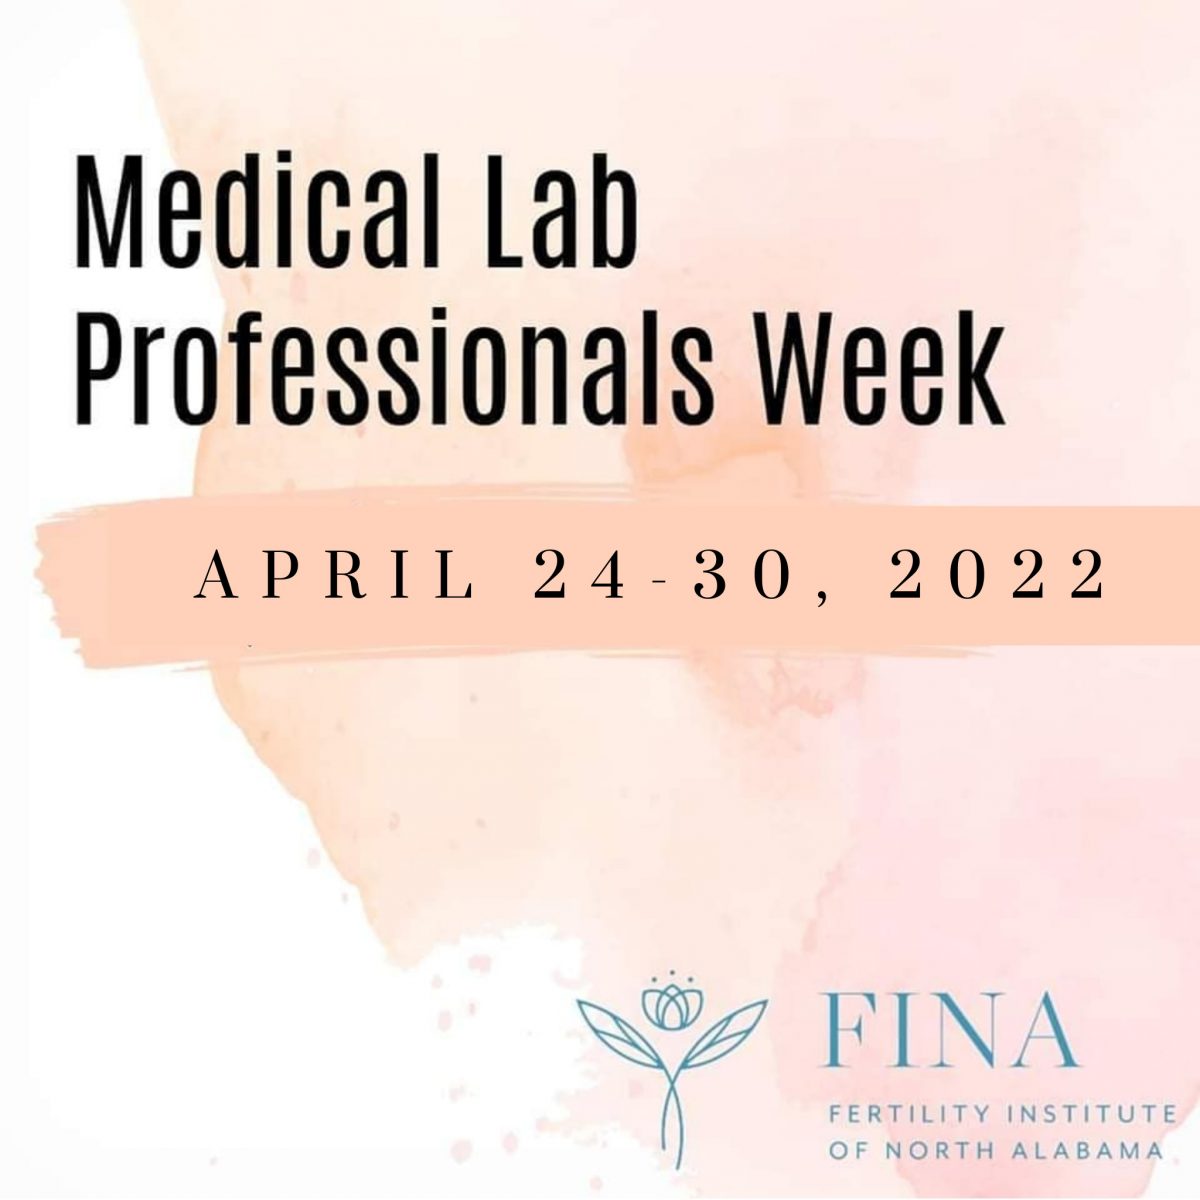 Medical Lab Professionals Week